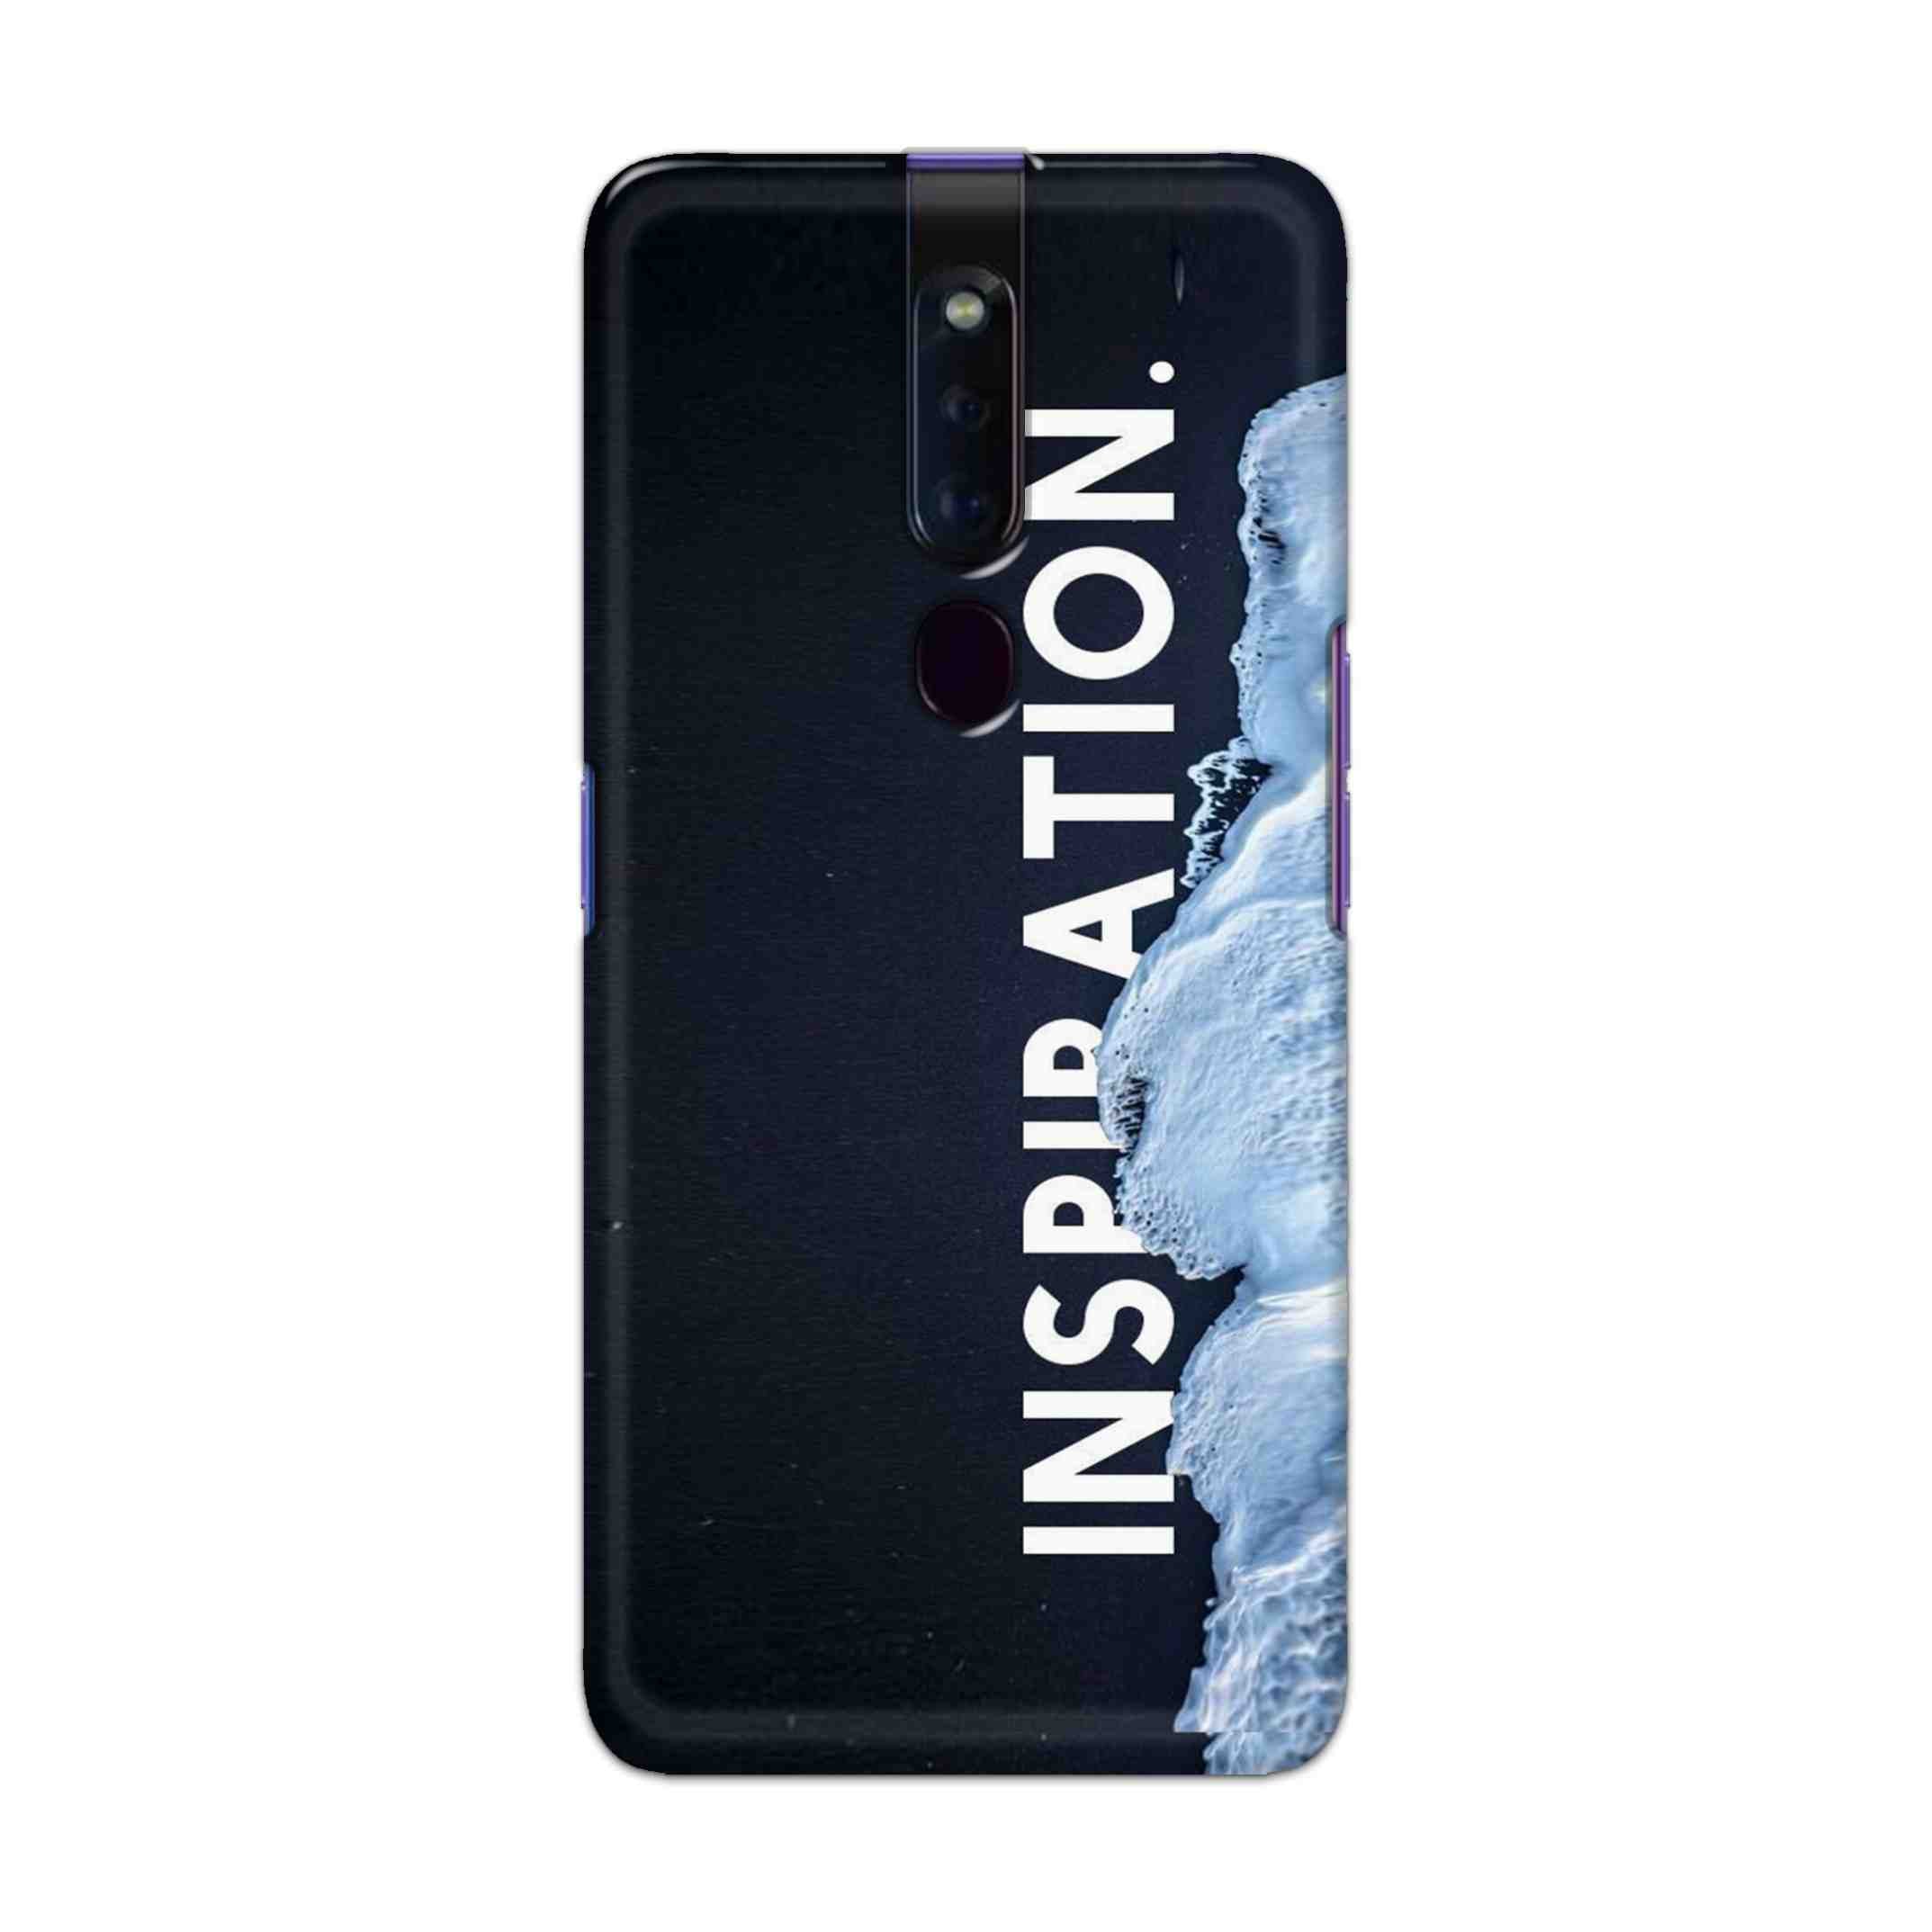 Buy Inspiration Hard Back Mobile Phone Case Cover For Oppo F11 Pro Online